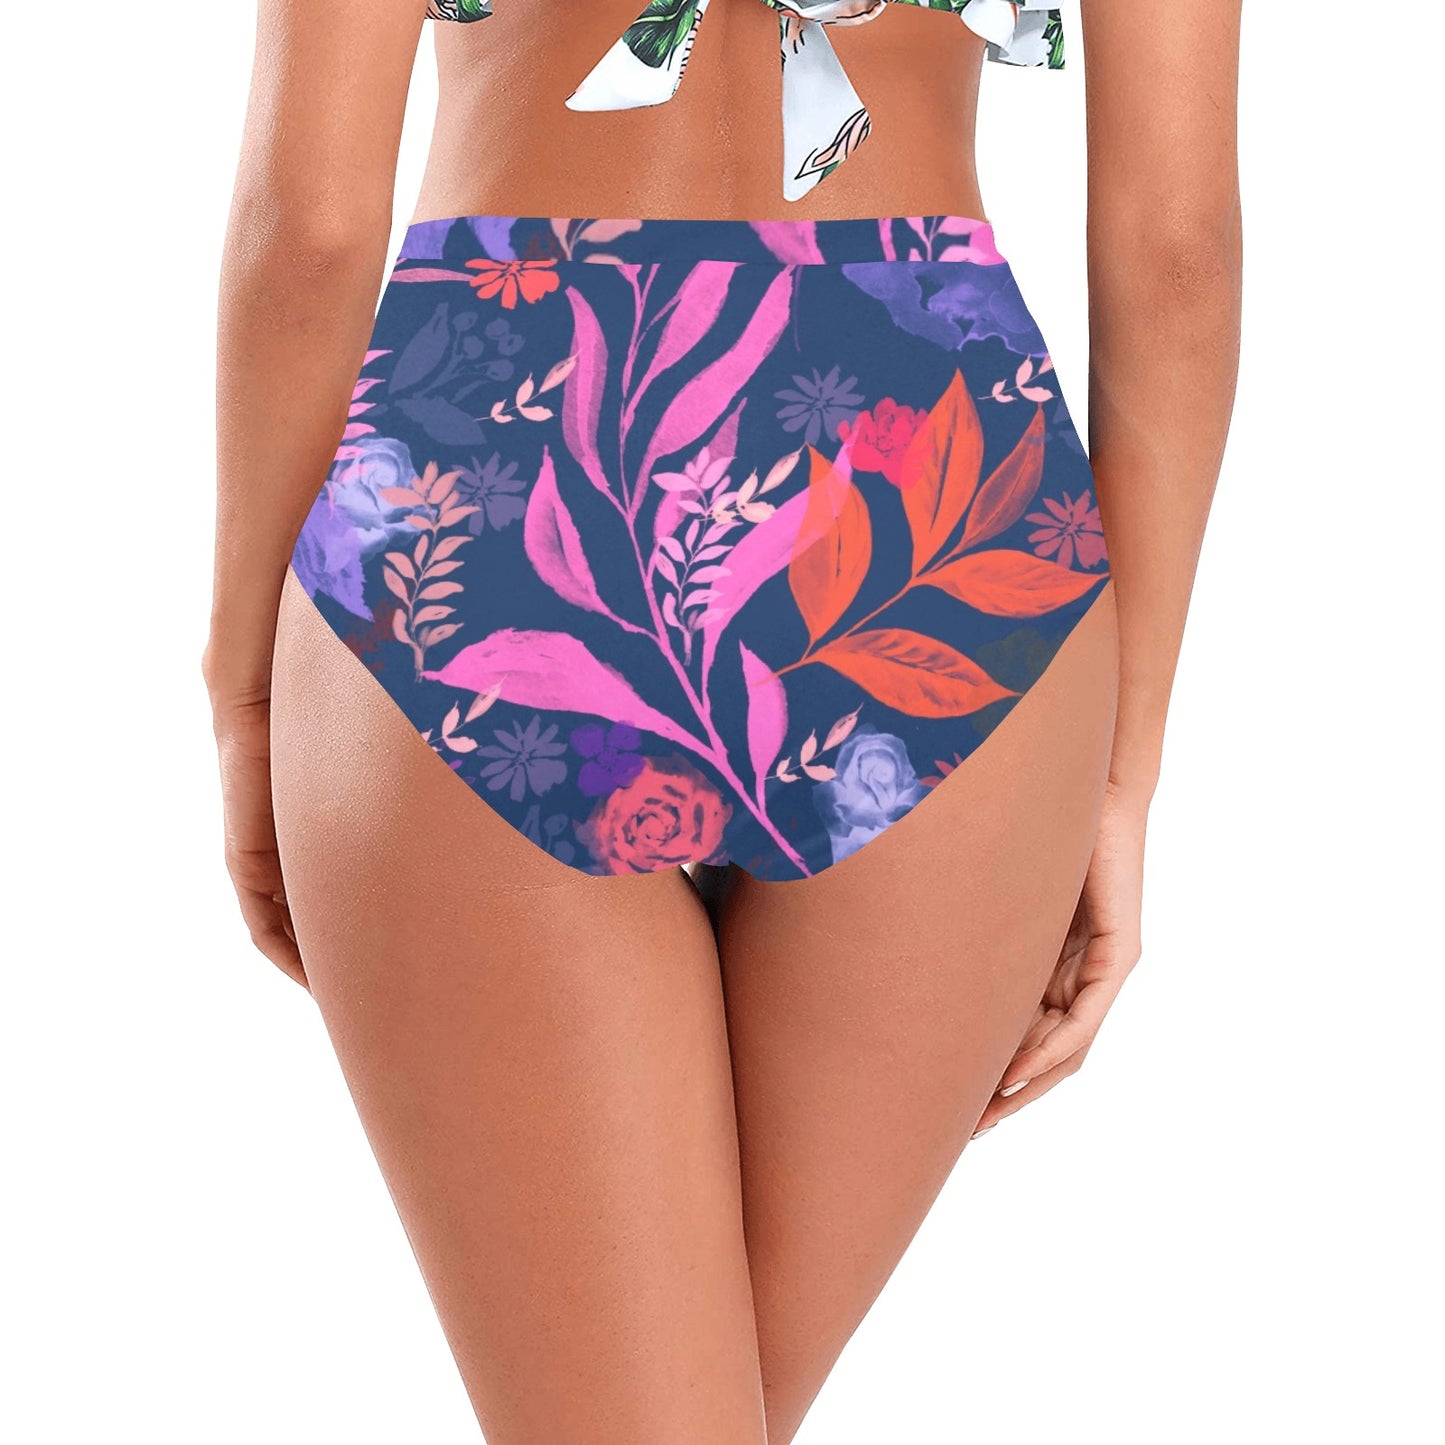 Multicolor Flowers High-Waisted Bikini Bottom. Design hand-painted by the Designer Maria Alejandra Echenique